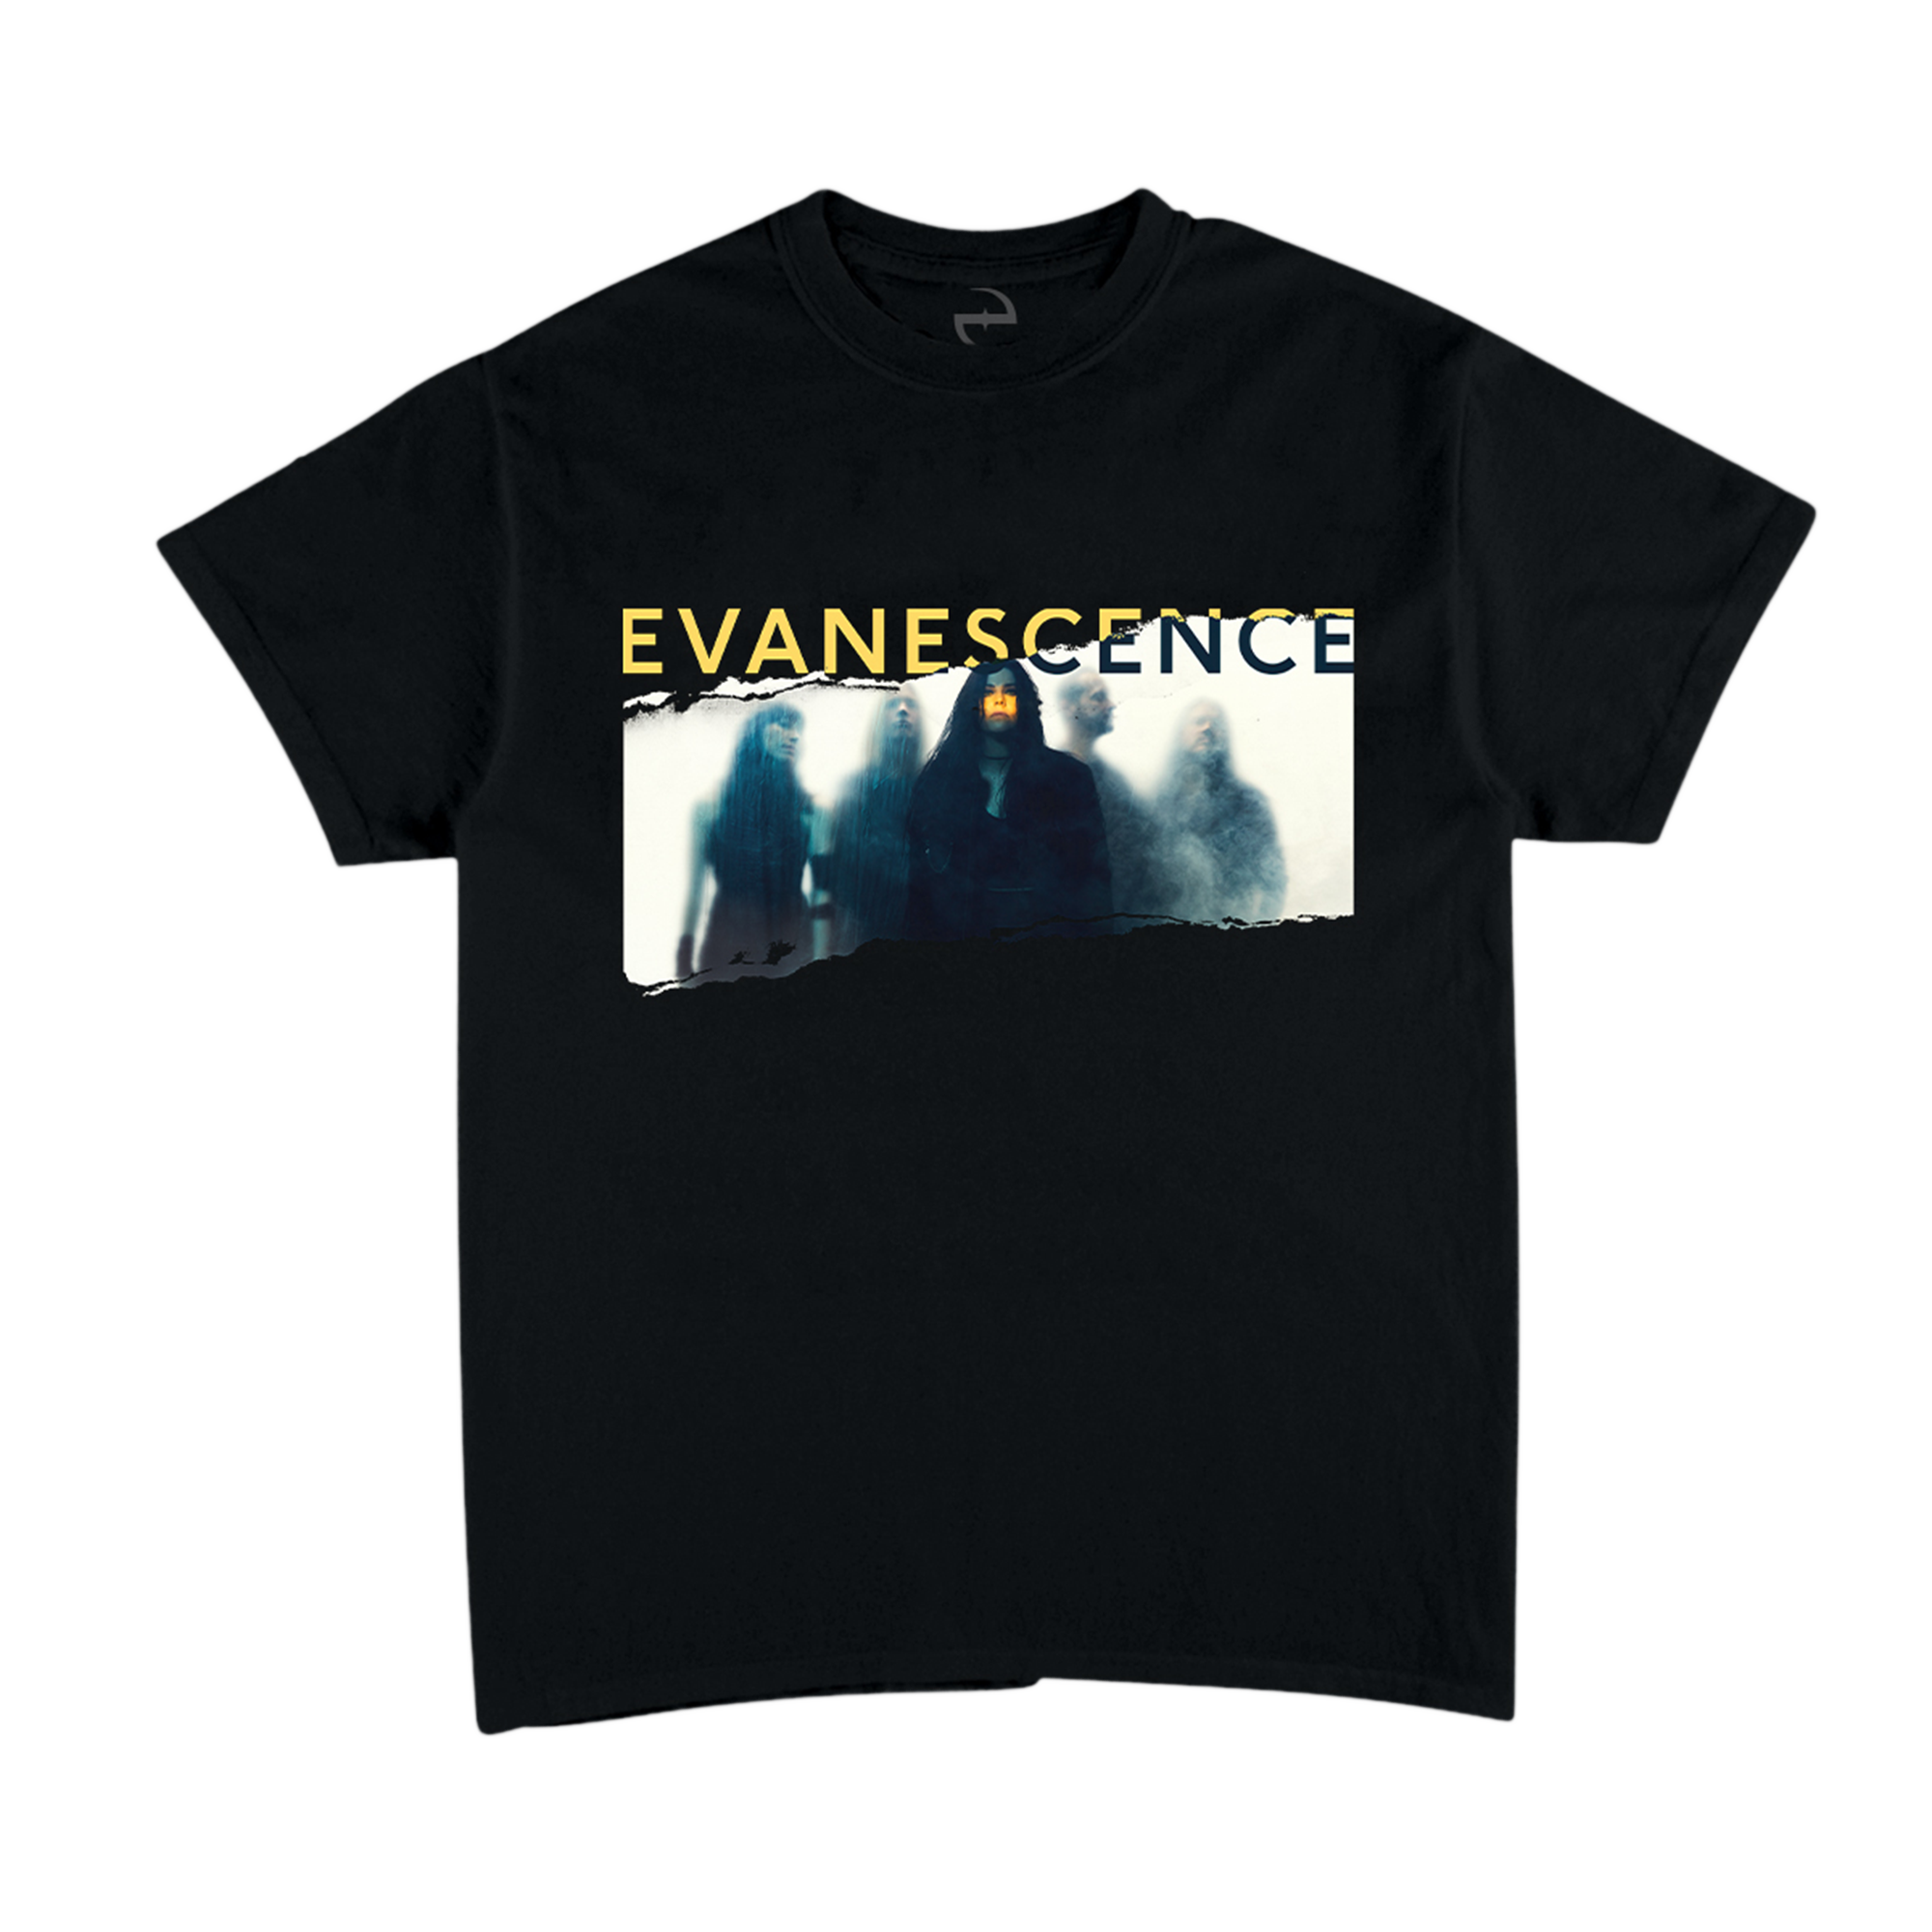 Logo Longsleeve Crop Top – Evanescence